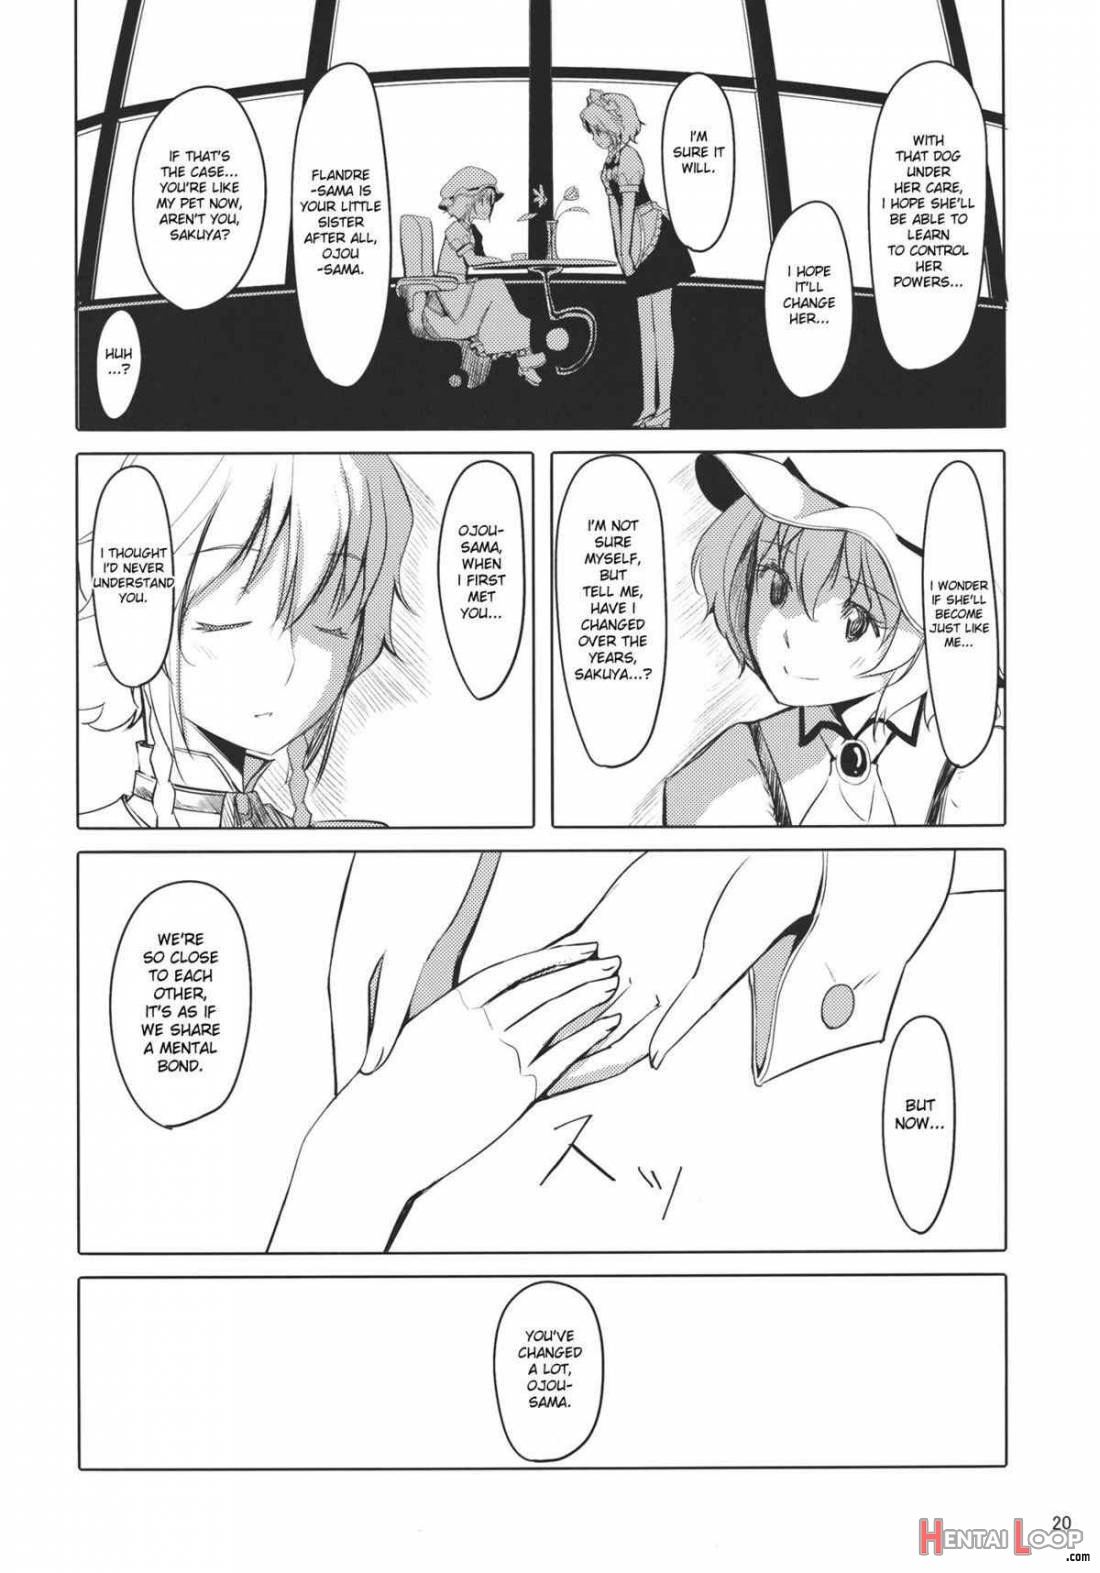 Flan-chan Infinity page 20